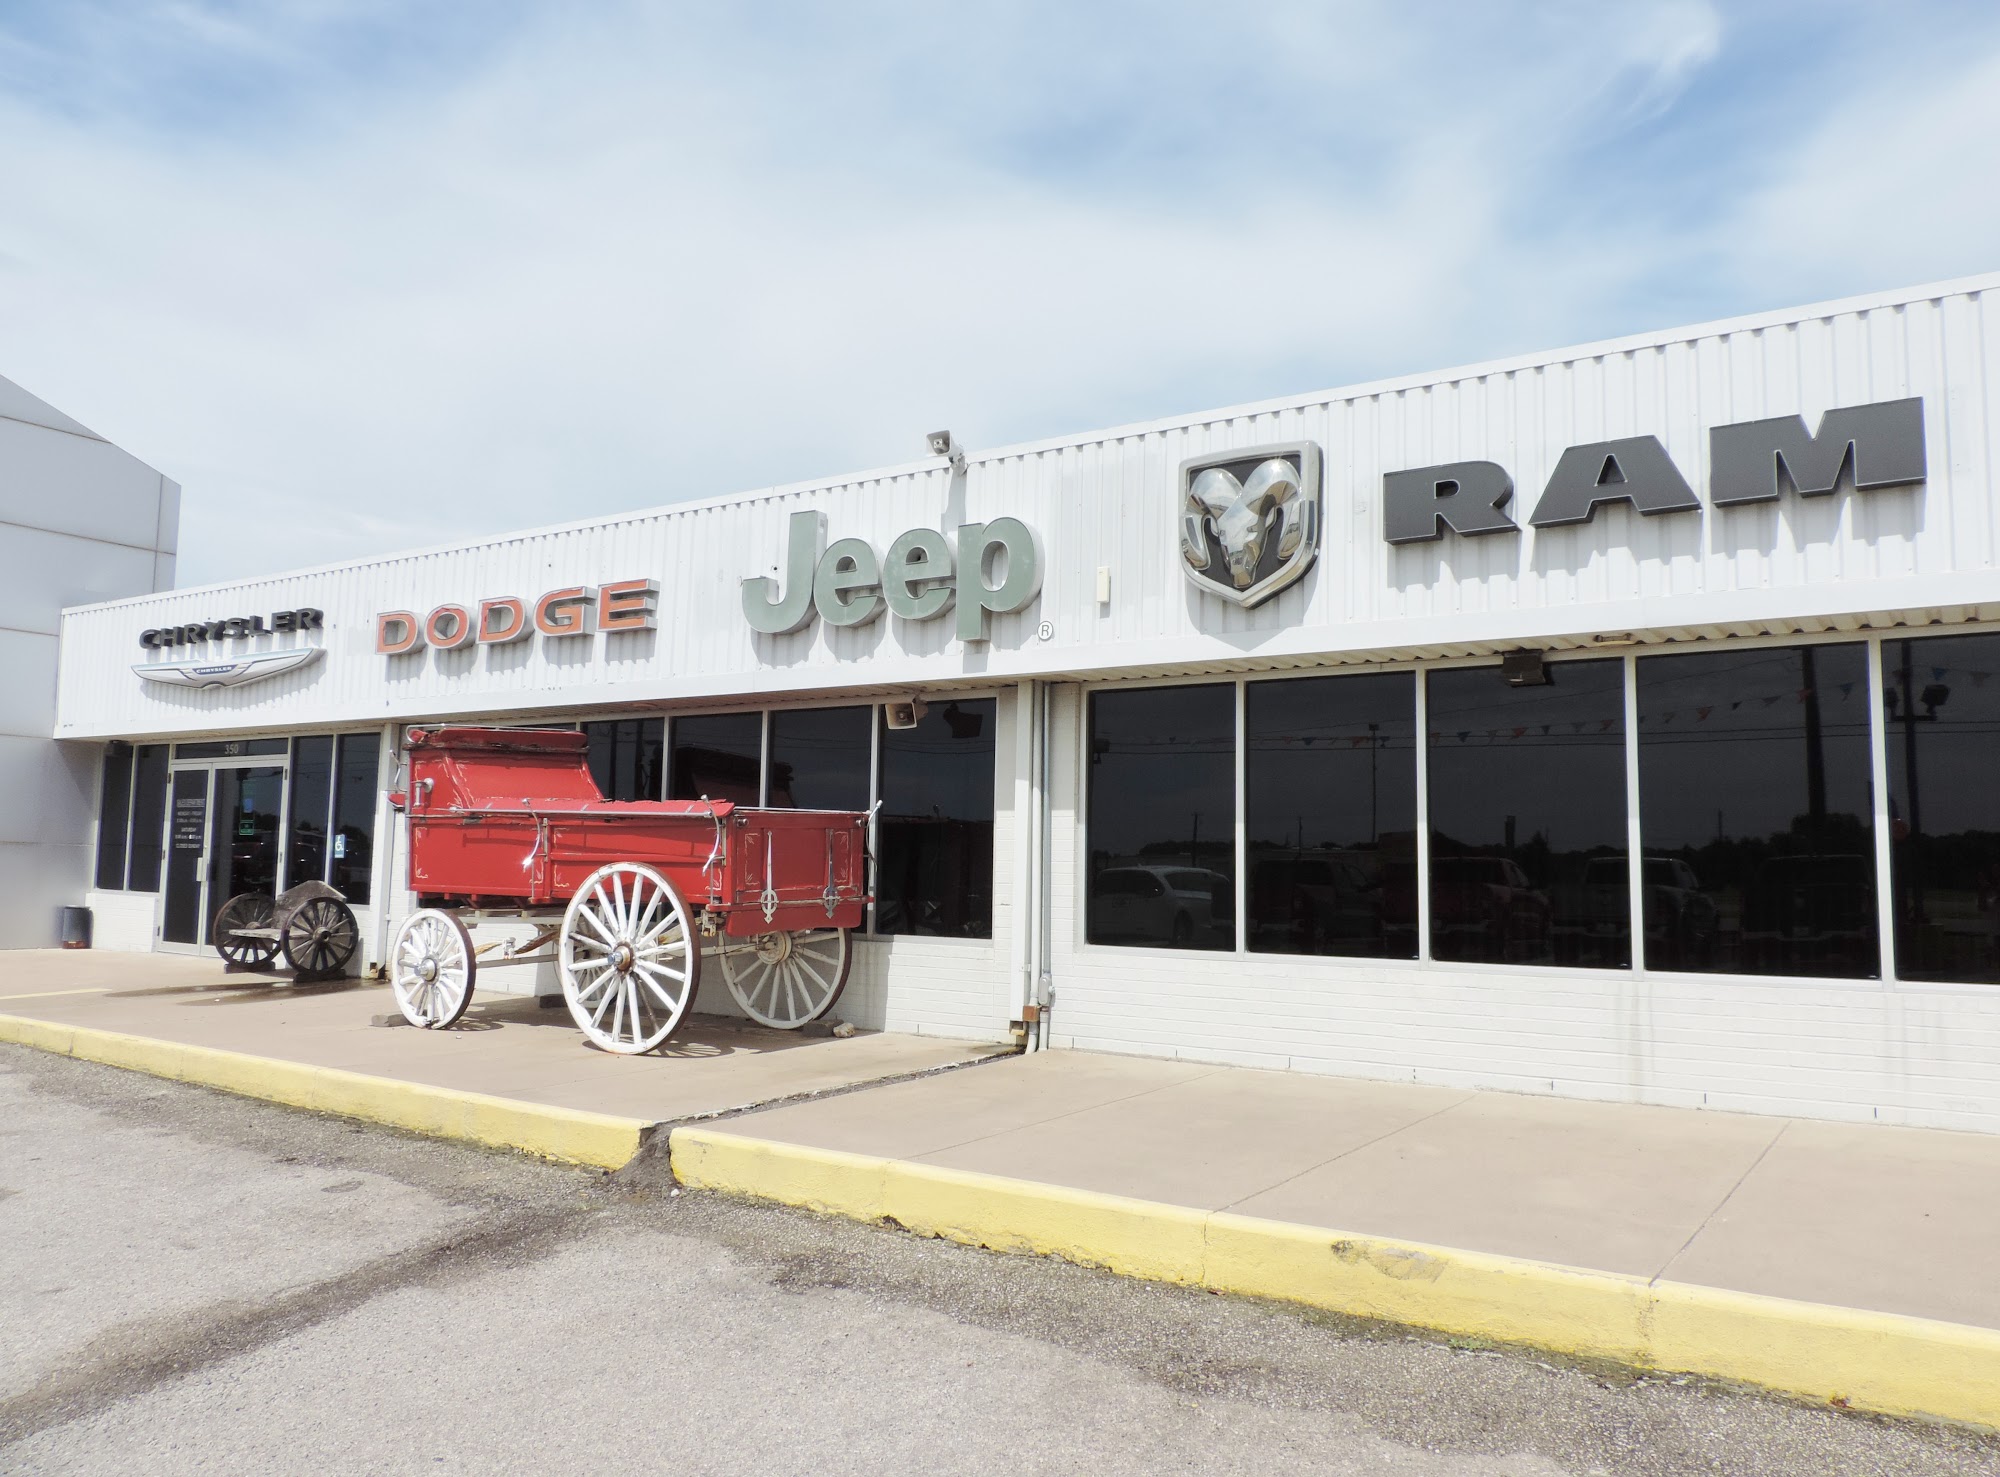 Freedom Chrysler Jeep Dodge Ram Fairfield by Ed Morse